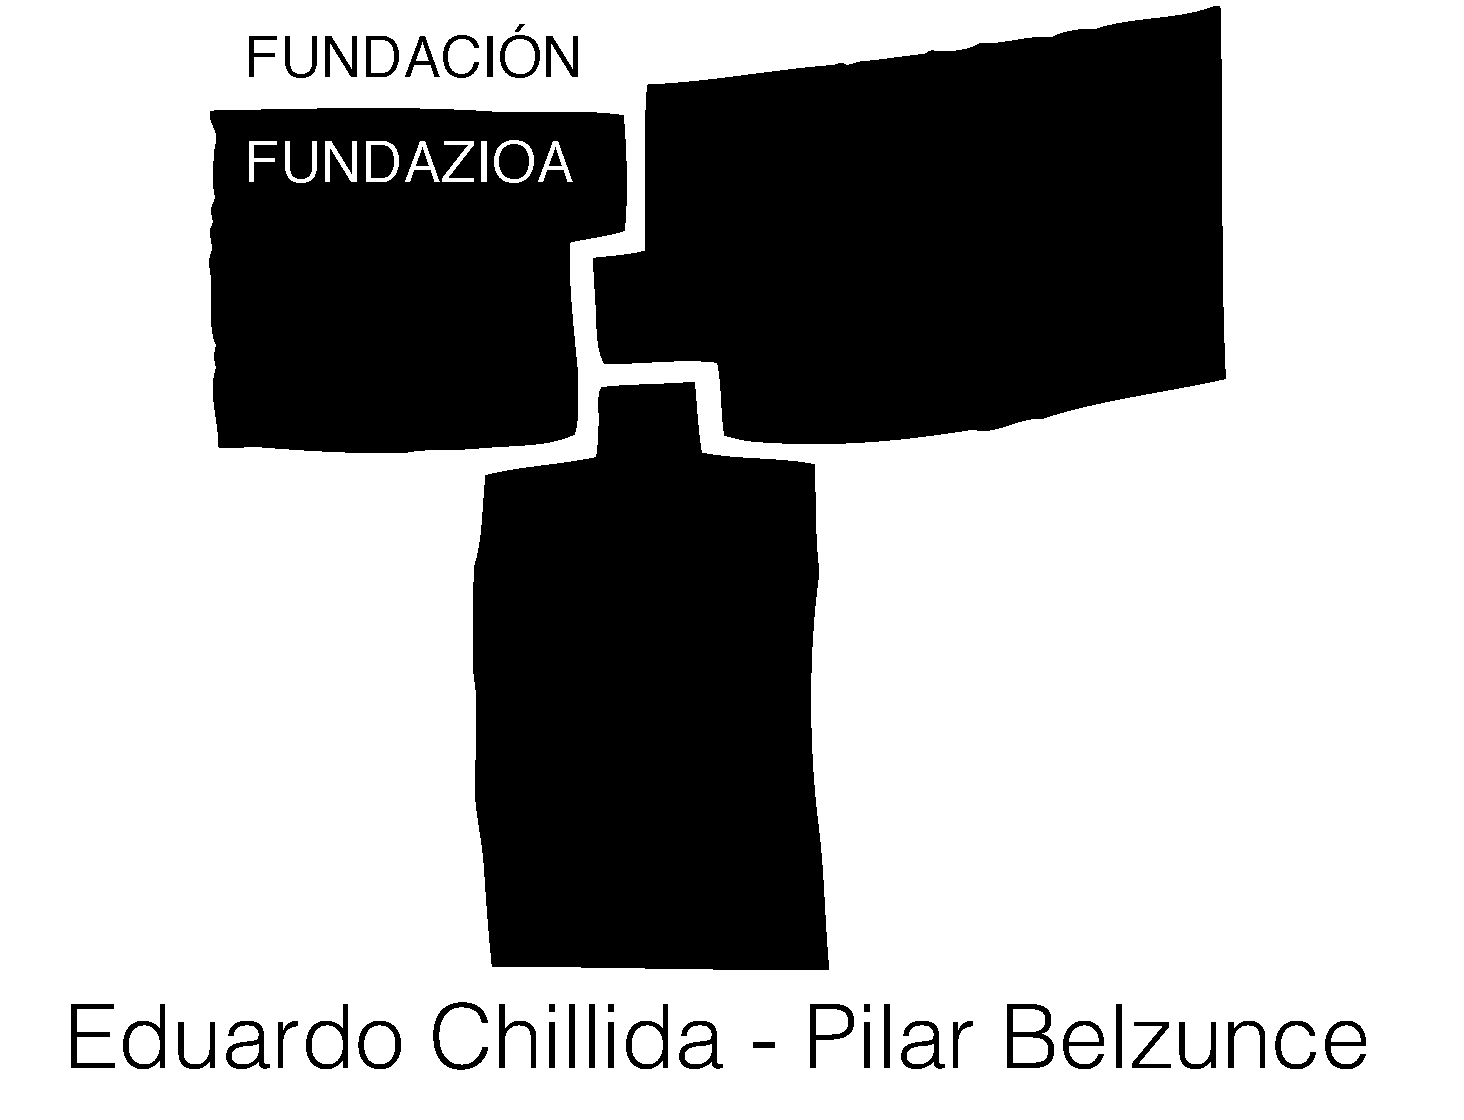 Fundación Eduardo Chillida - Pilar Belzunce